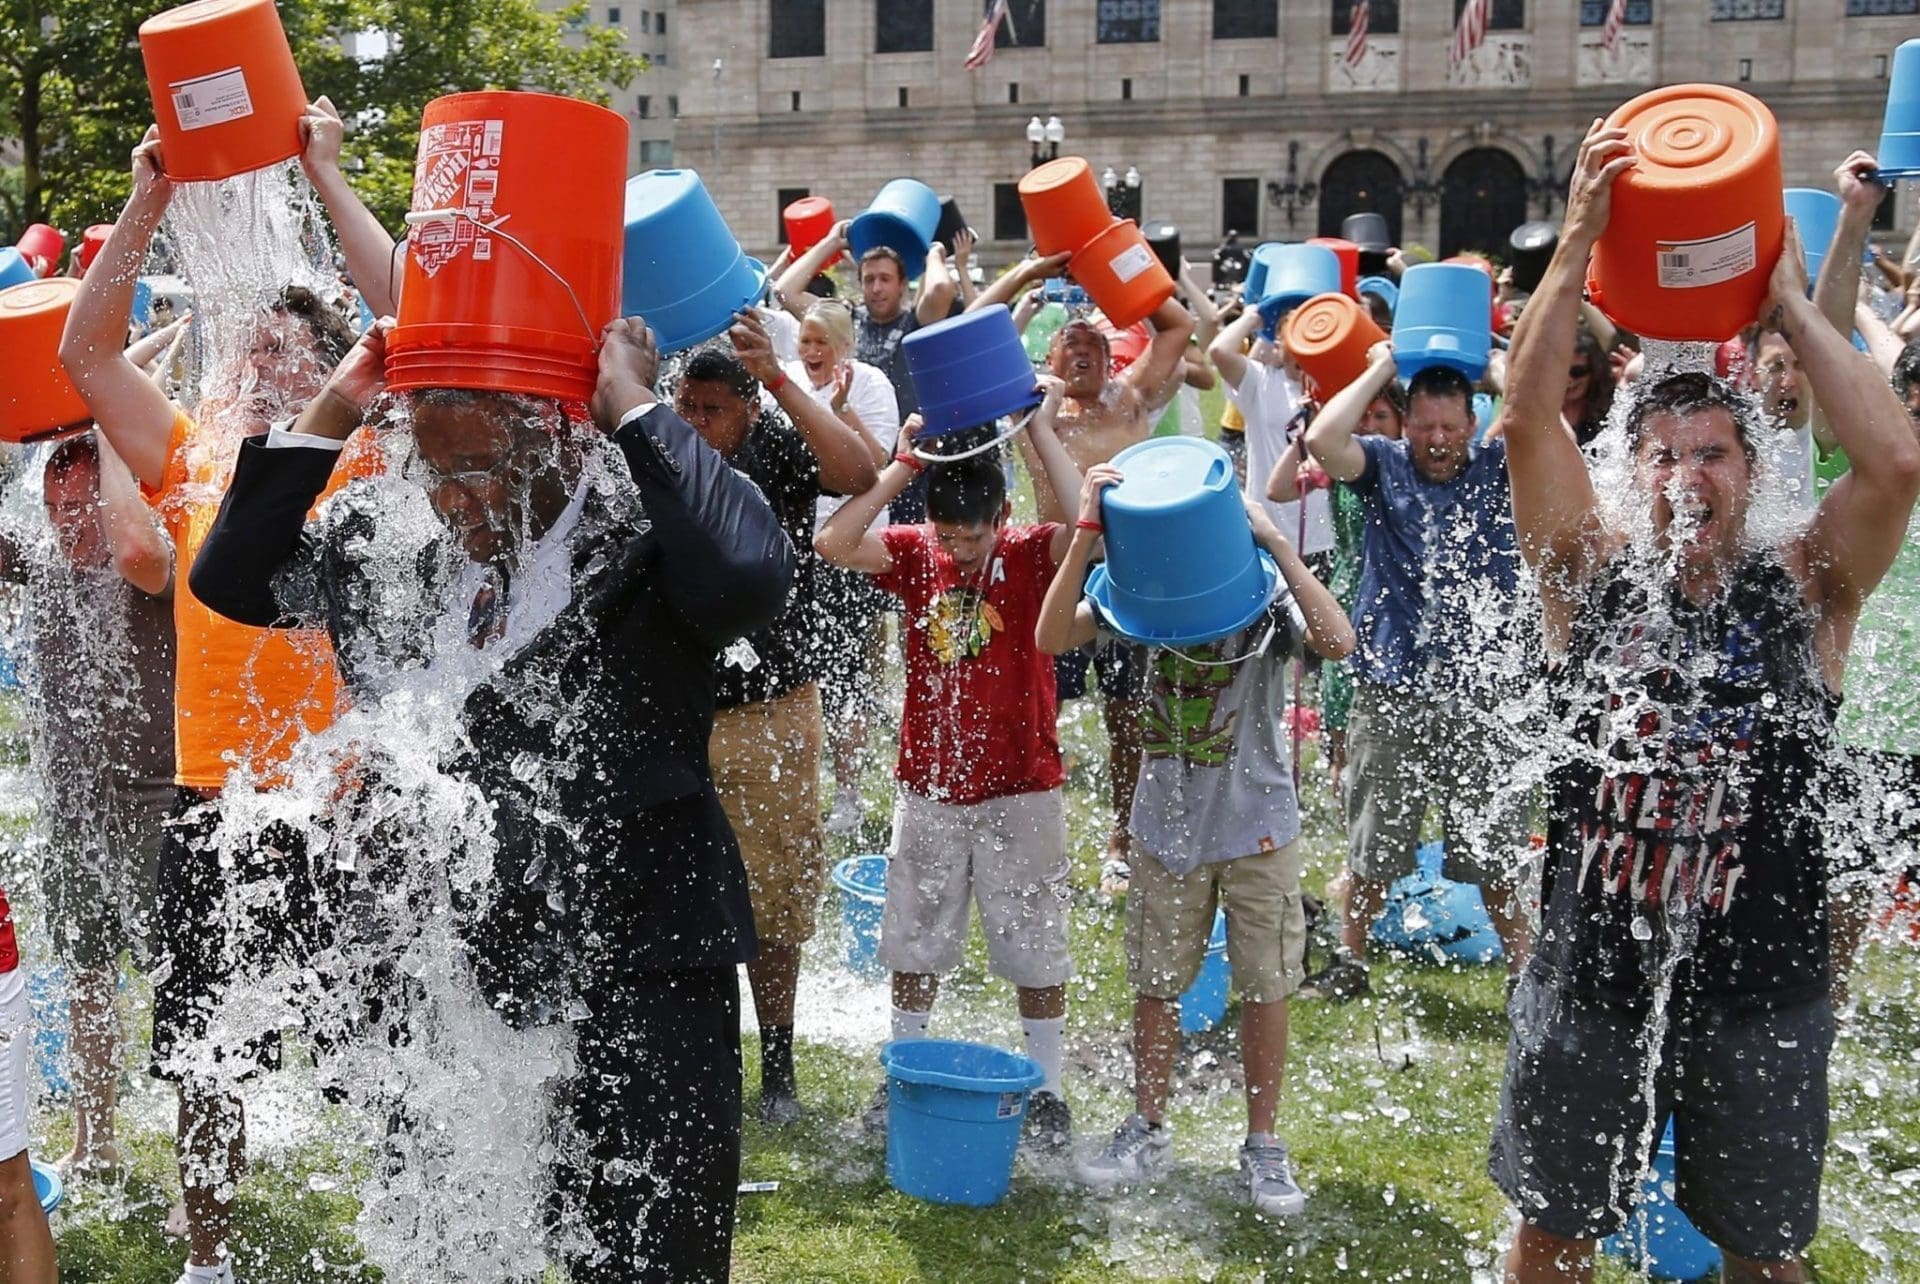 ALSA, ice bucket challenge, Loh Gehrig Disease, Pete Frates, Strike Out ALS